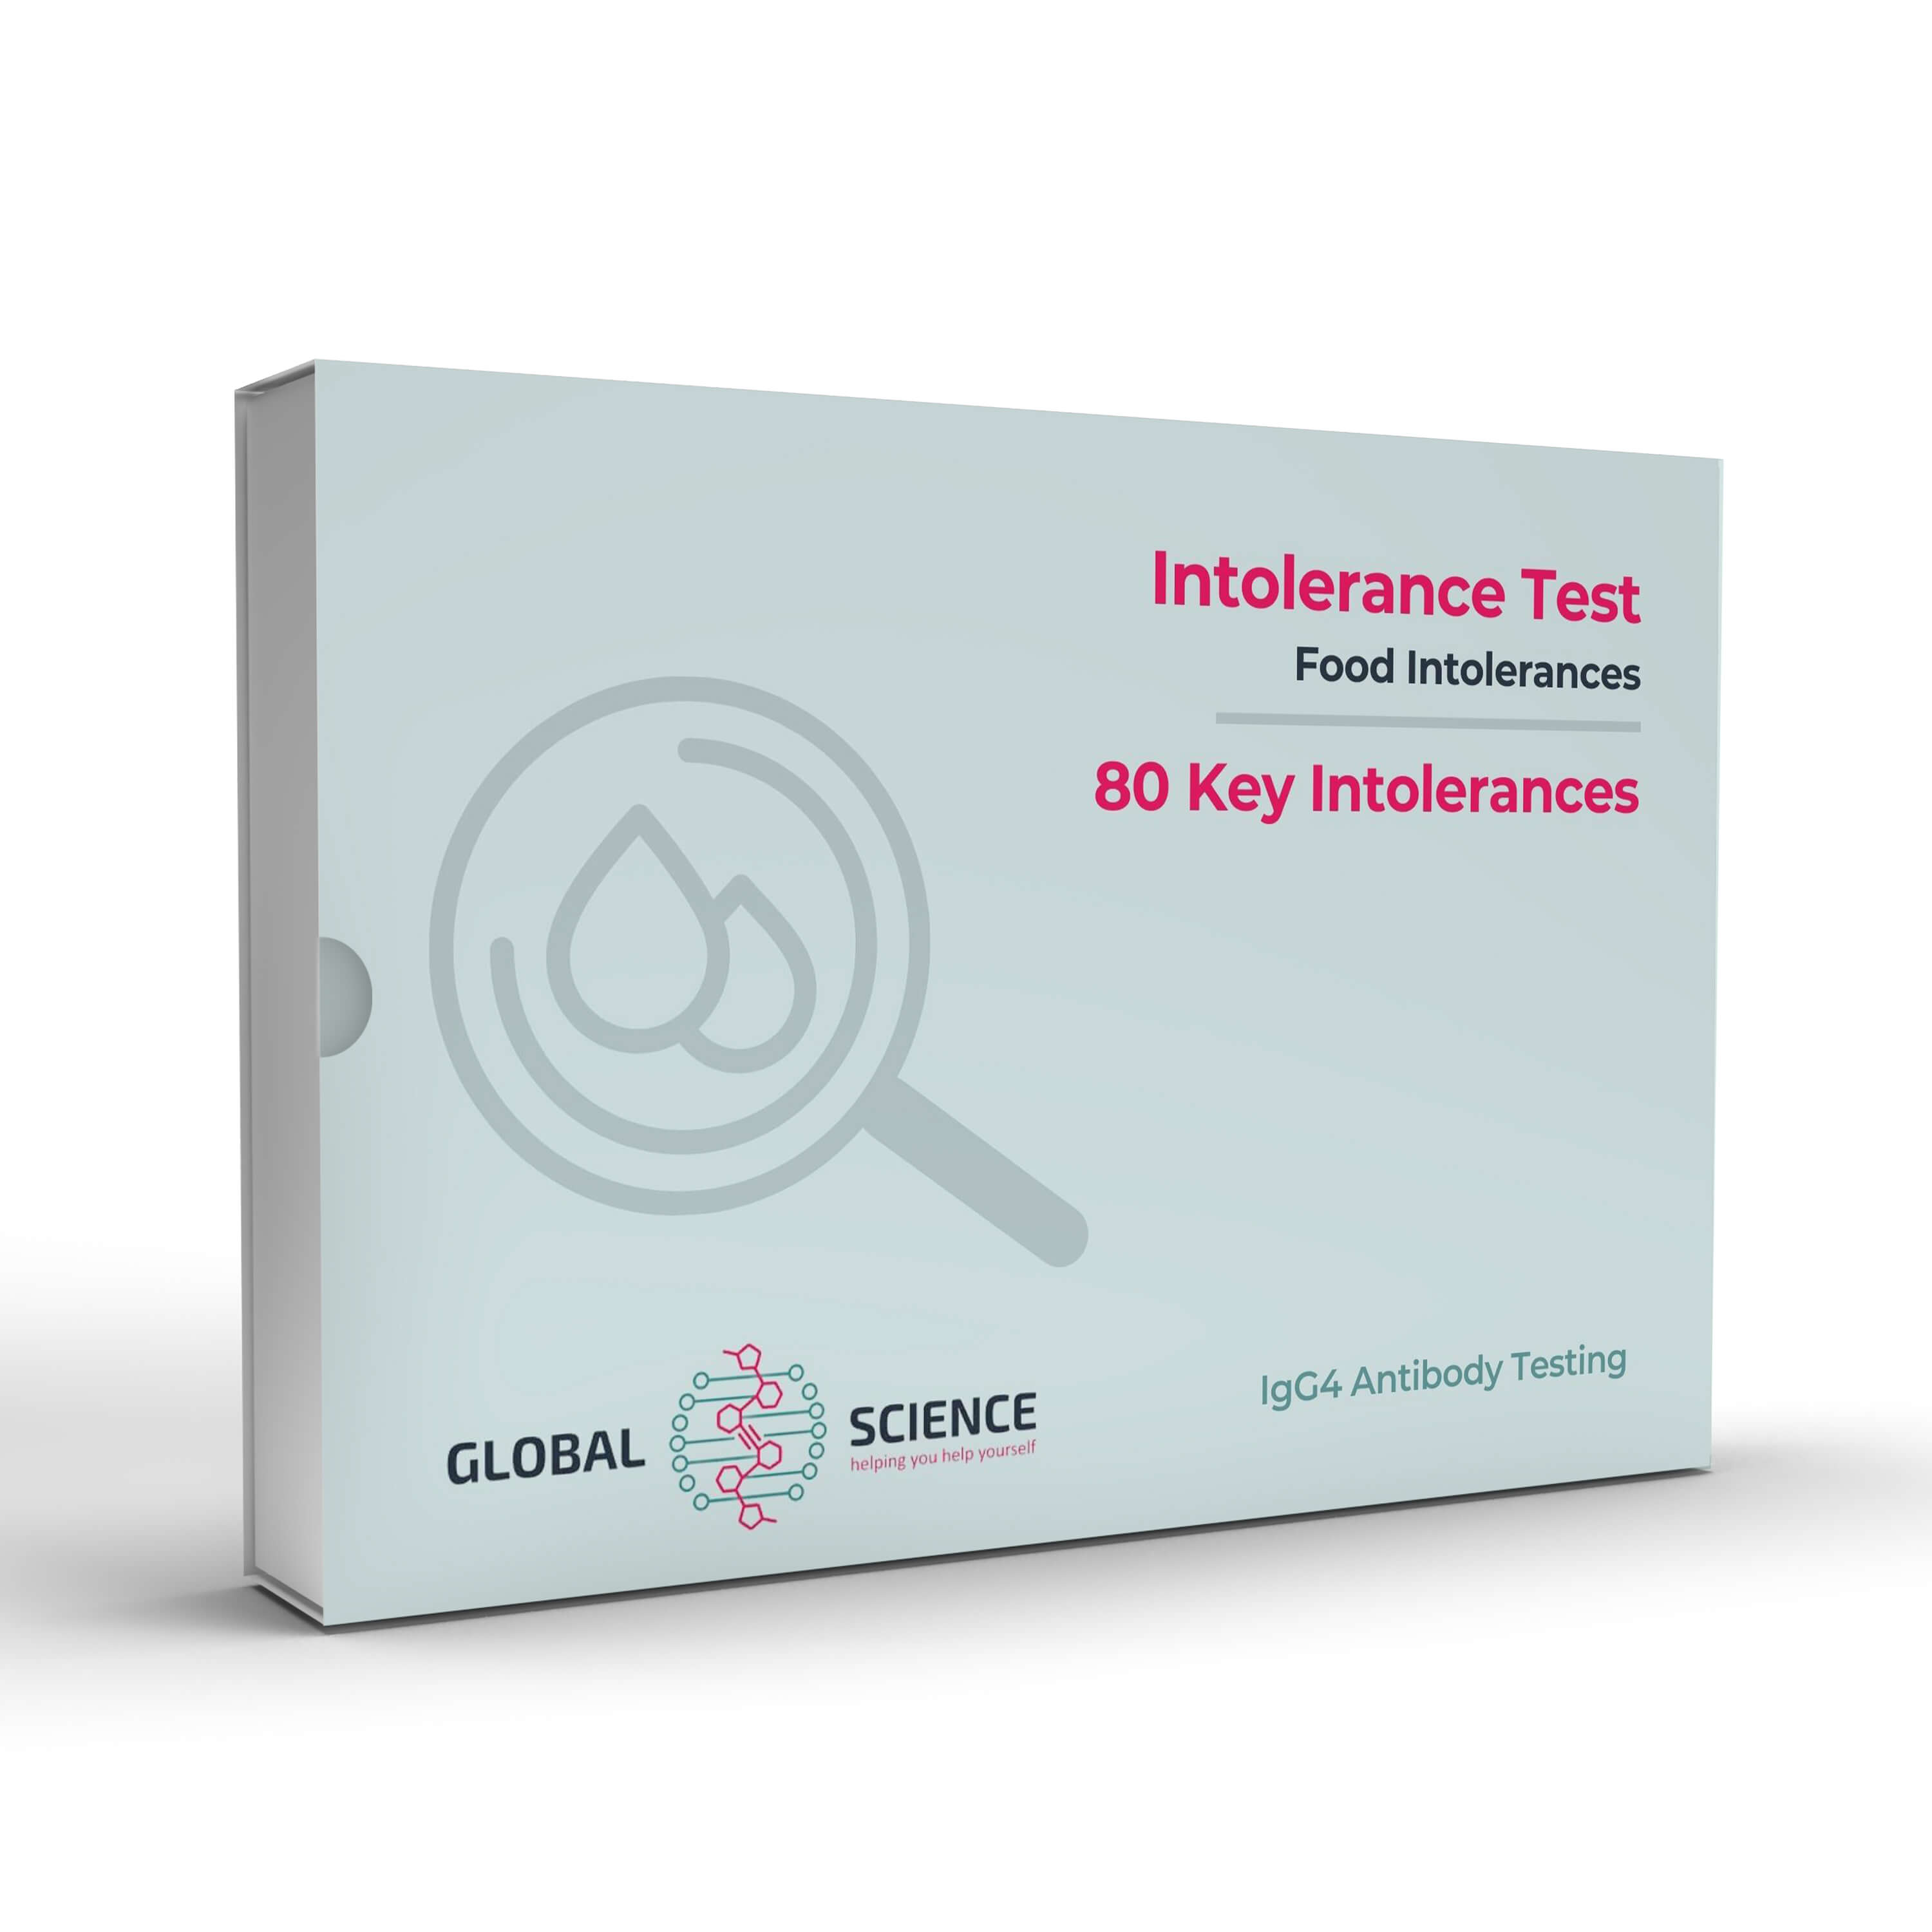 Intolerance 80 Kit Mock up - Elimination diet following an allergy or intolerance test